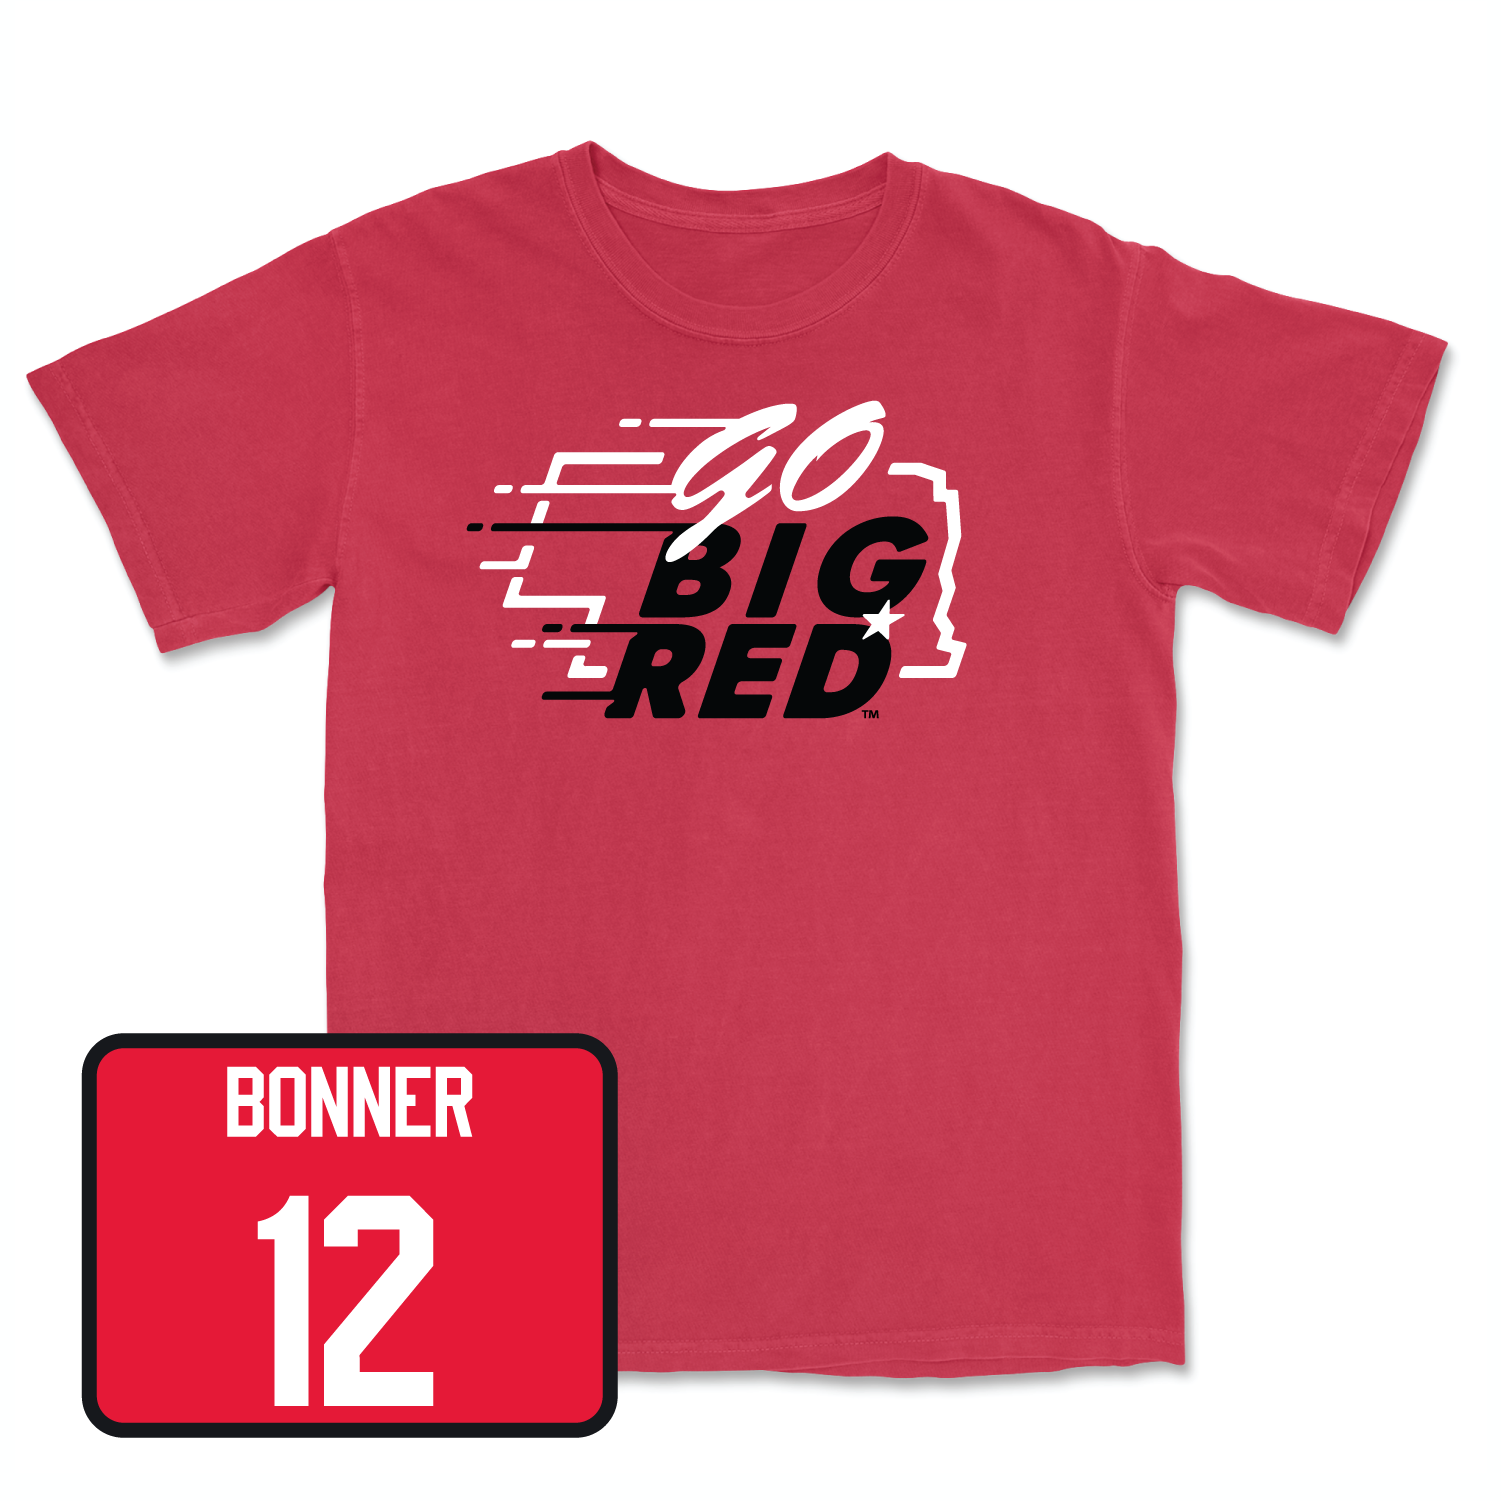 Red Football GBR Tee 2 Large / Janiran Bonner | #12